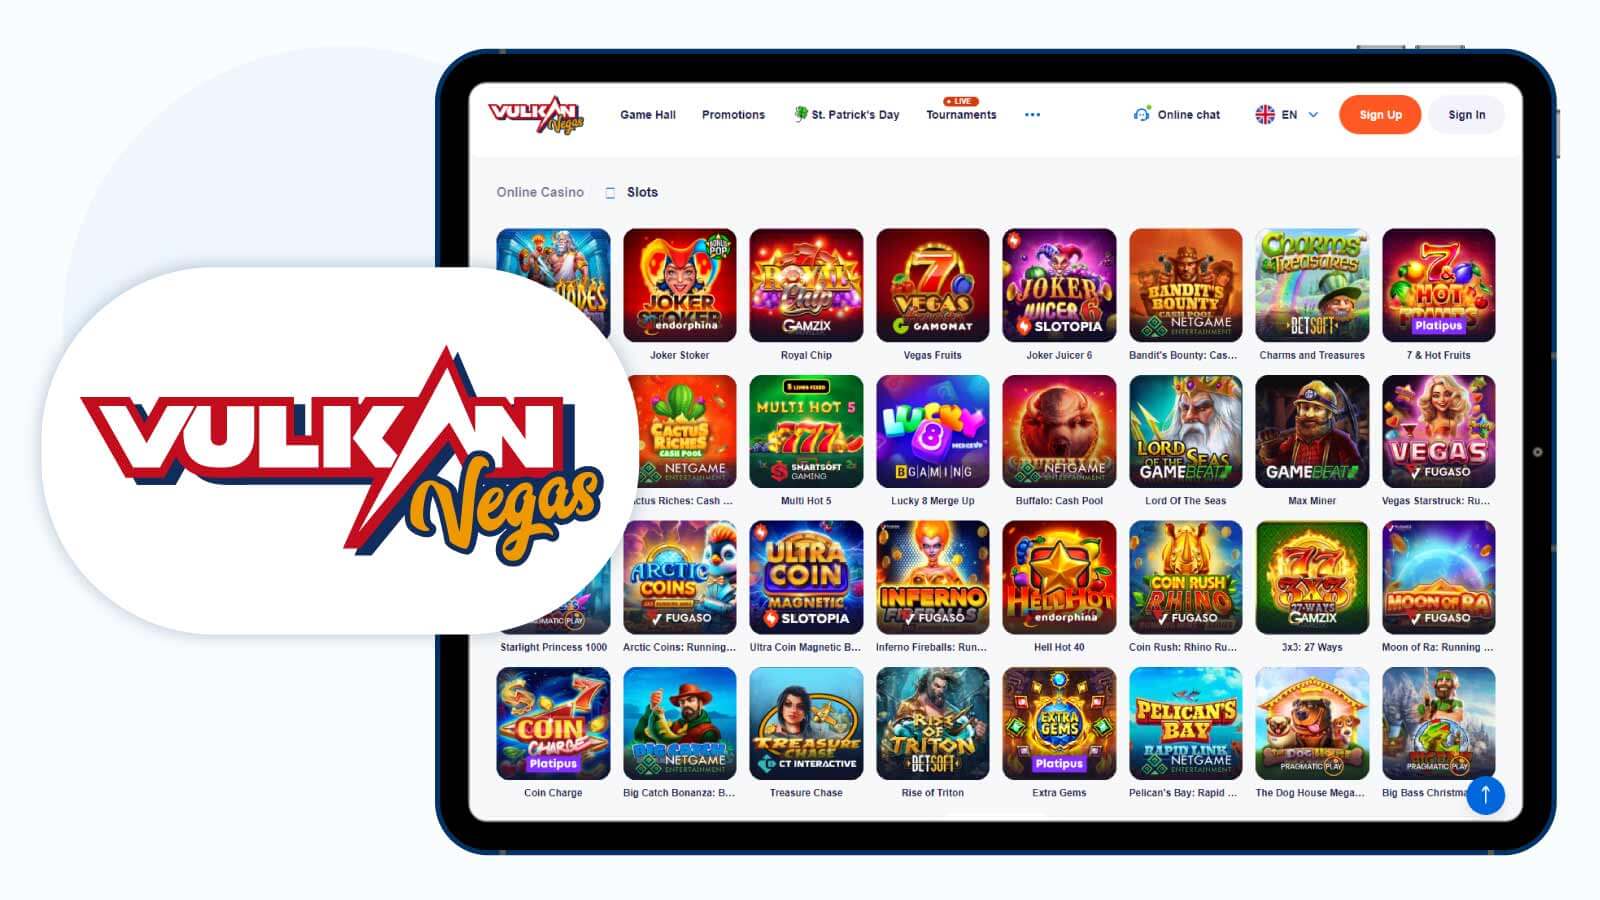 Vulkan Vegas Casino Outstanding €10 Minimum Deposit Casino for Slots